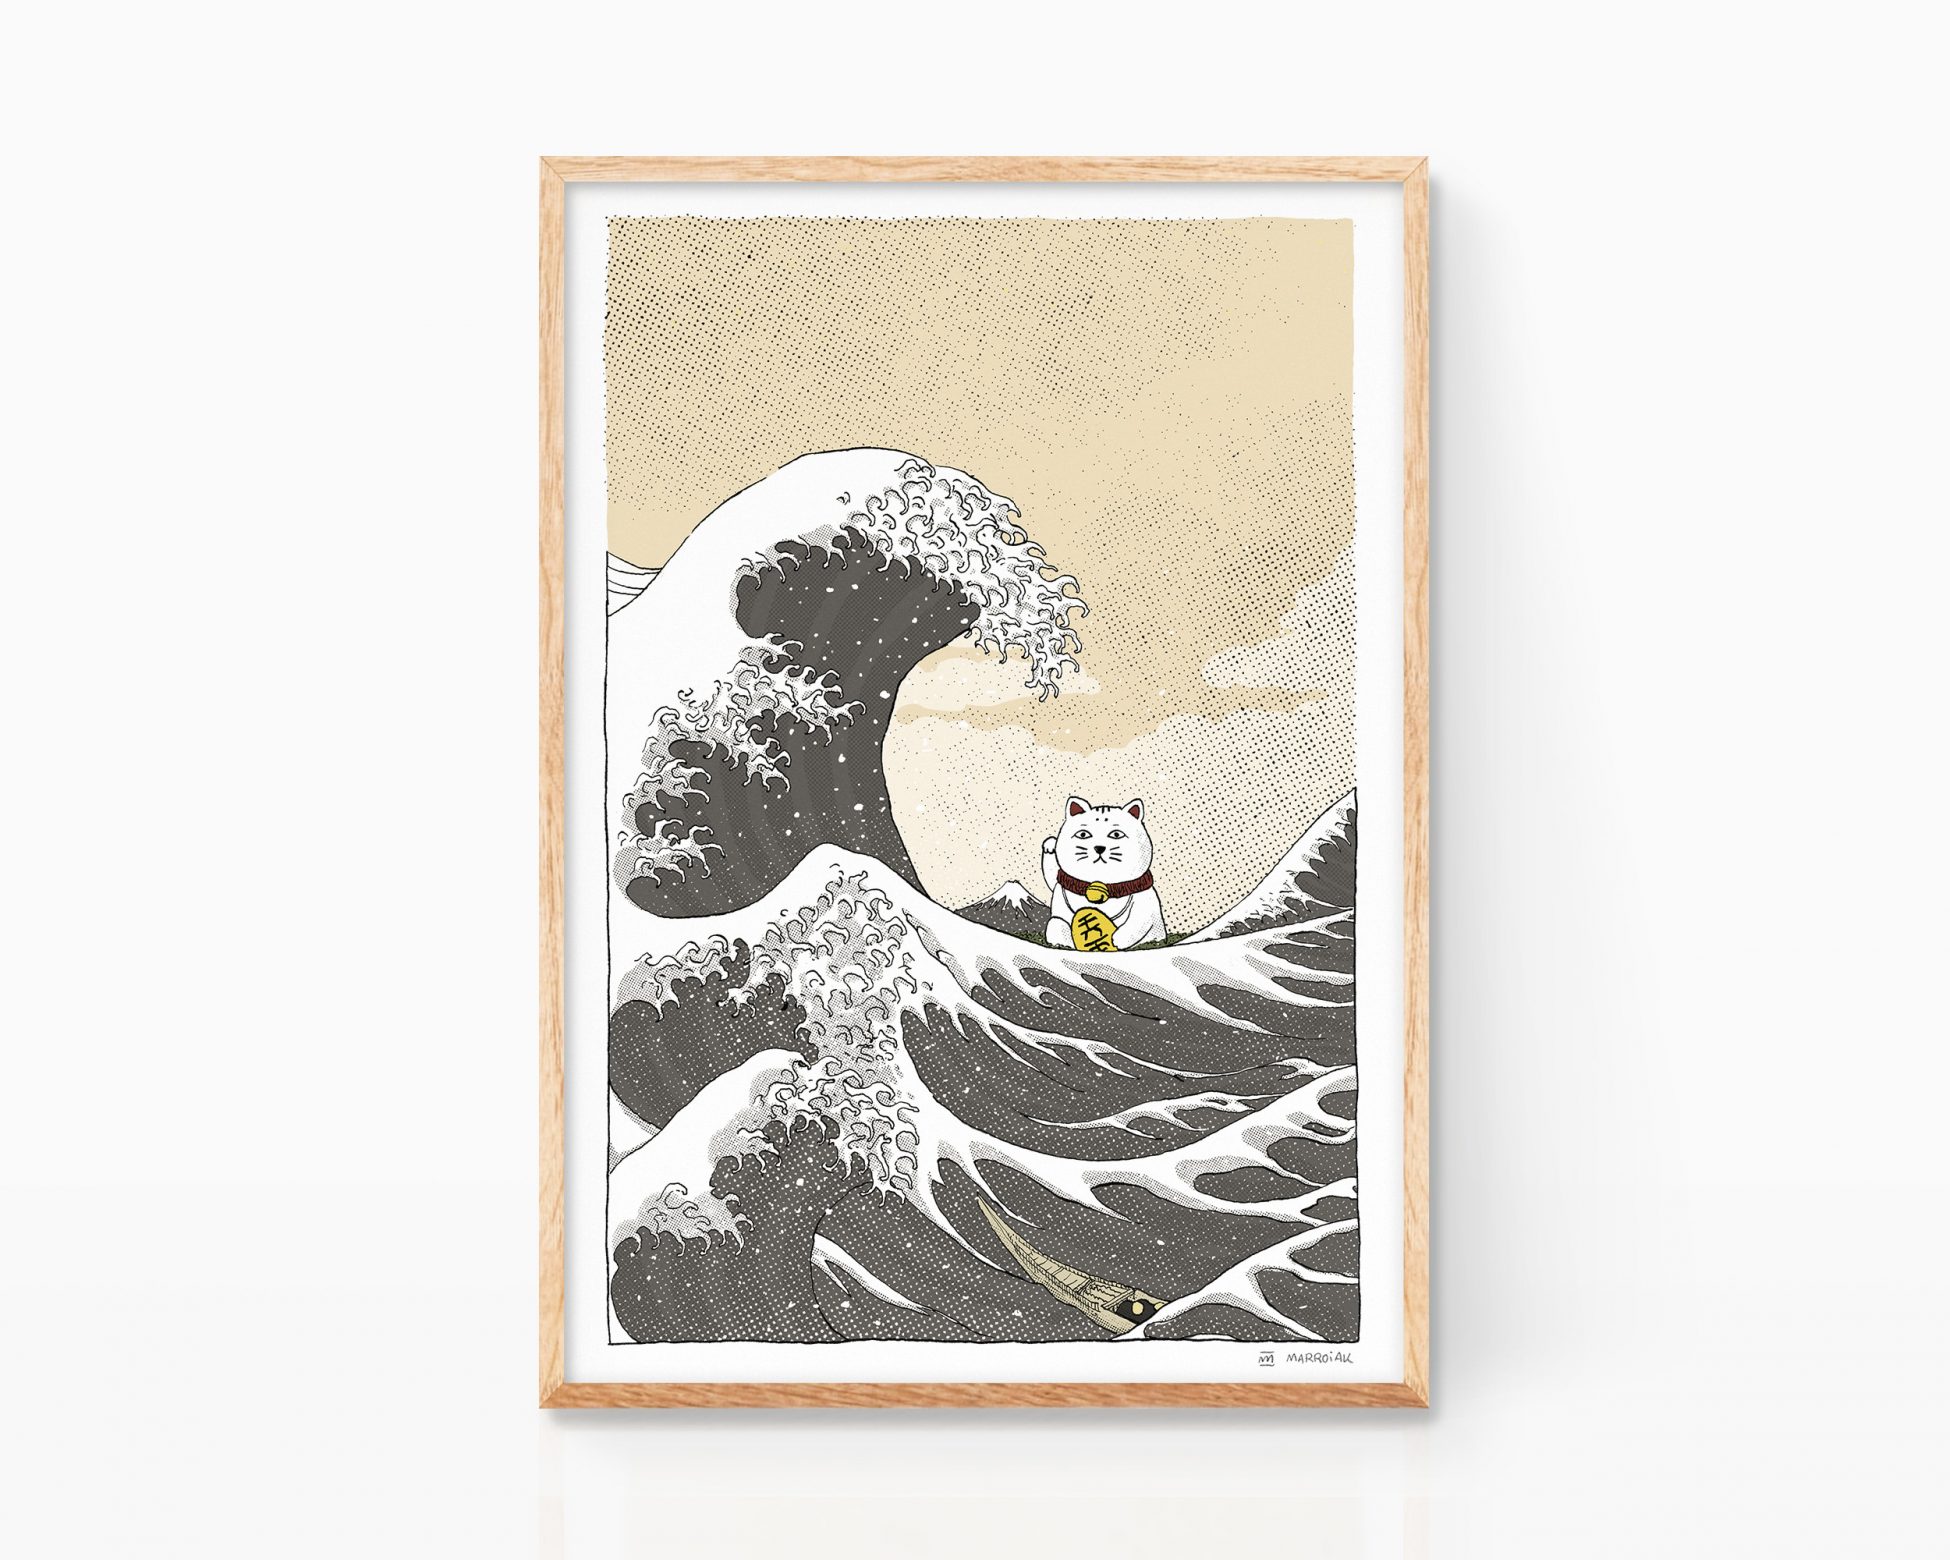 The great wave off kanagawa katsushika hokusai remix. Maneki Neko illustration print. Japanese ukiyo-e cat and ocean